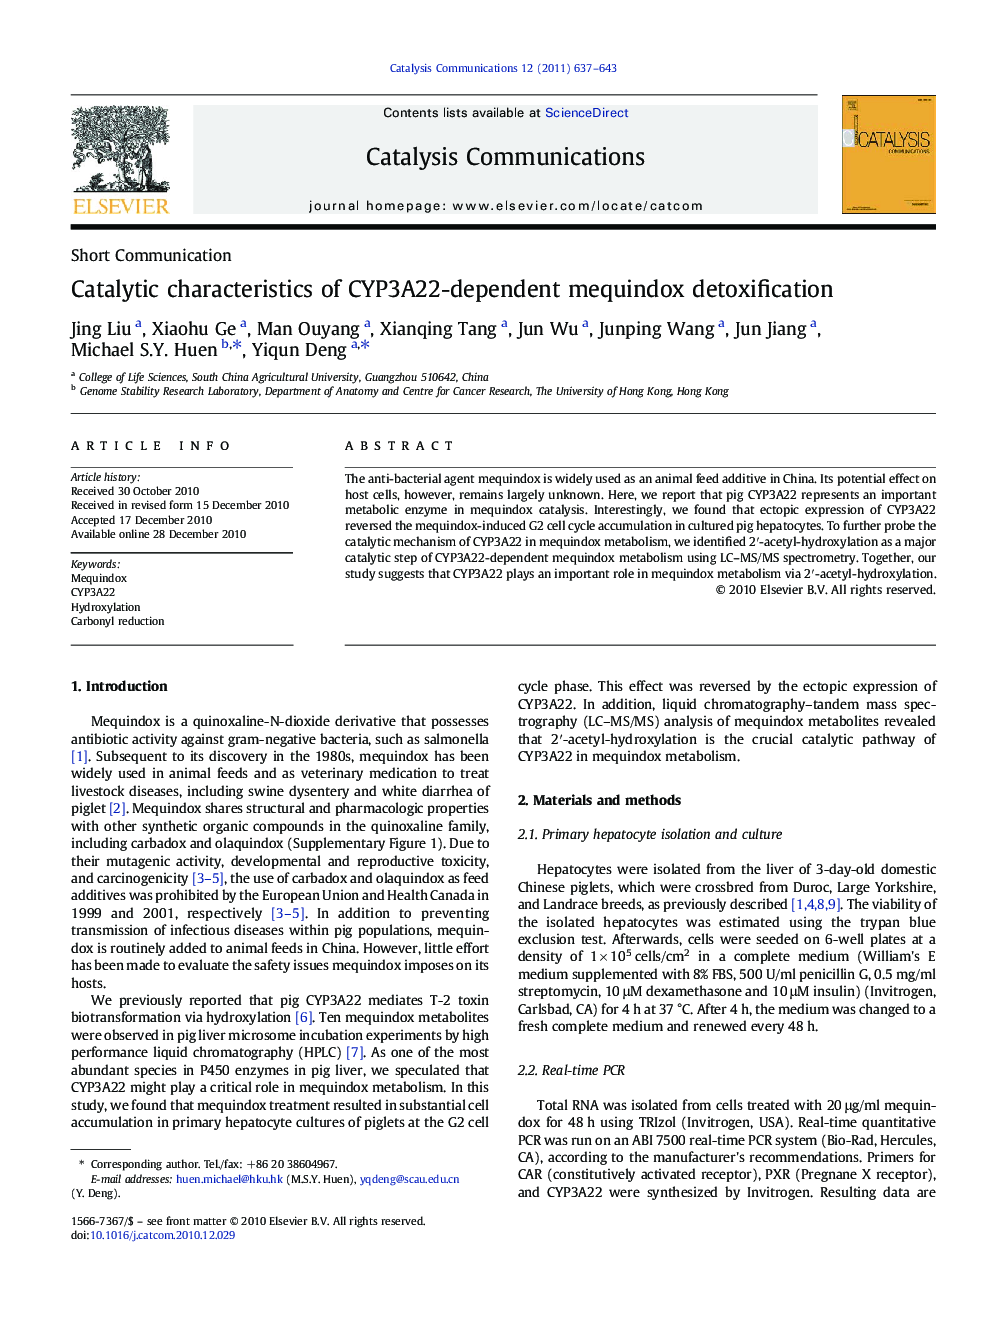 Catalytic characteristics of CYP3A22-dependent mequindox detoxification